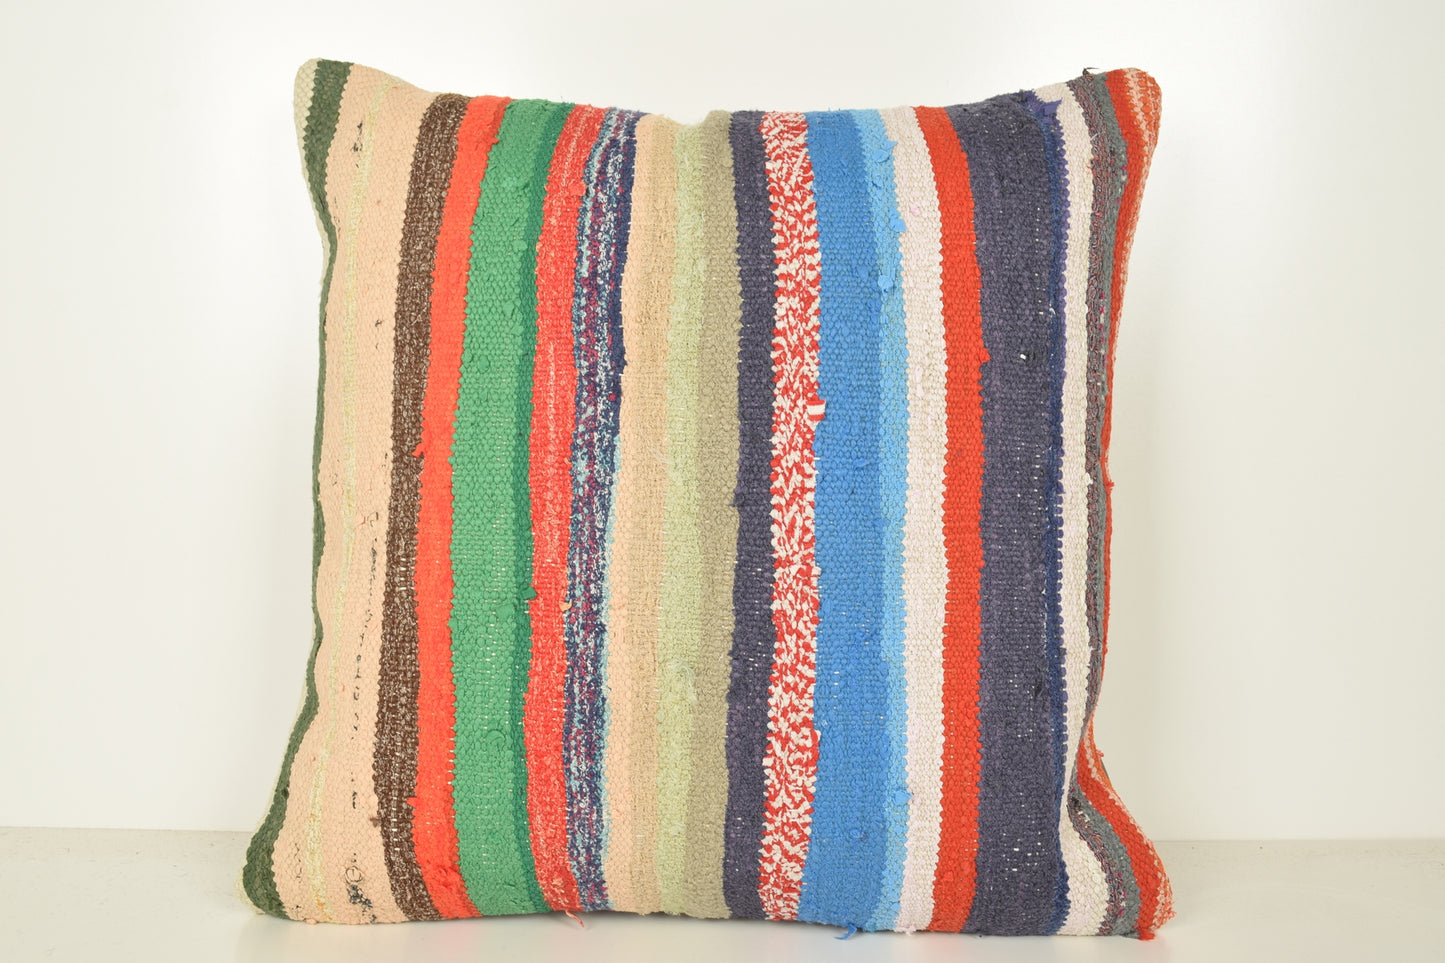 Turkish Throw Pillow Covers A00974 24x24 Cross-stitch Handicraft Beautiful